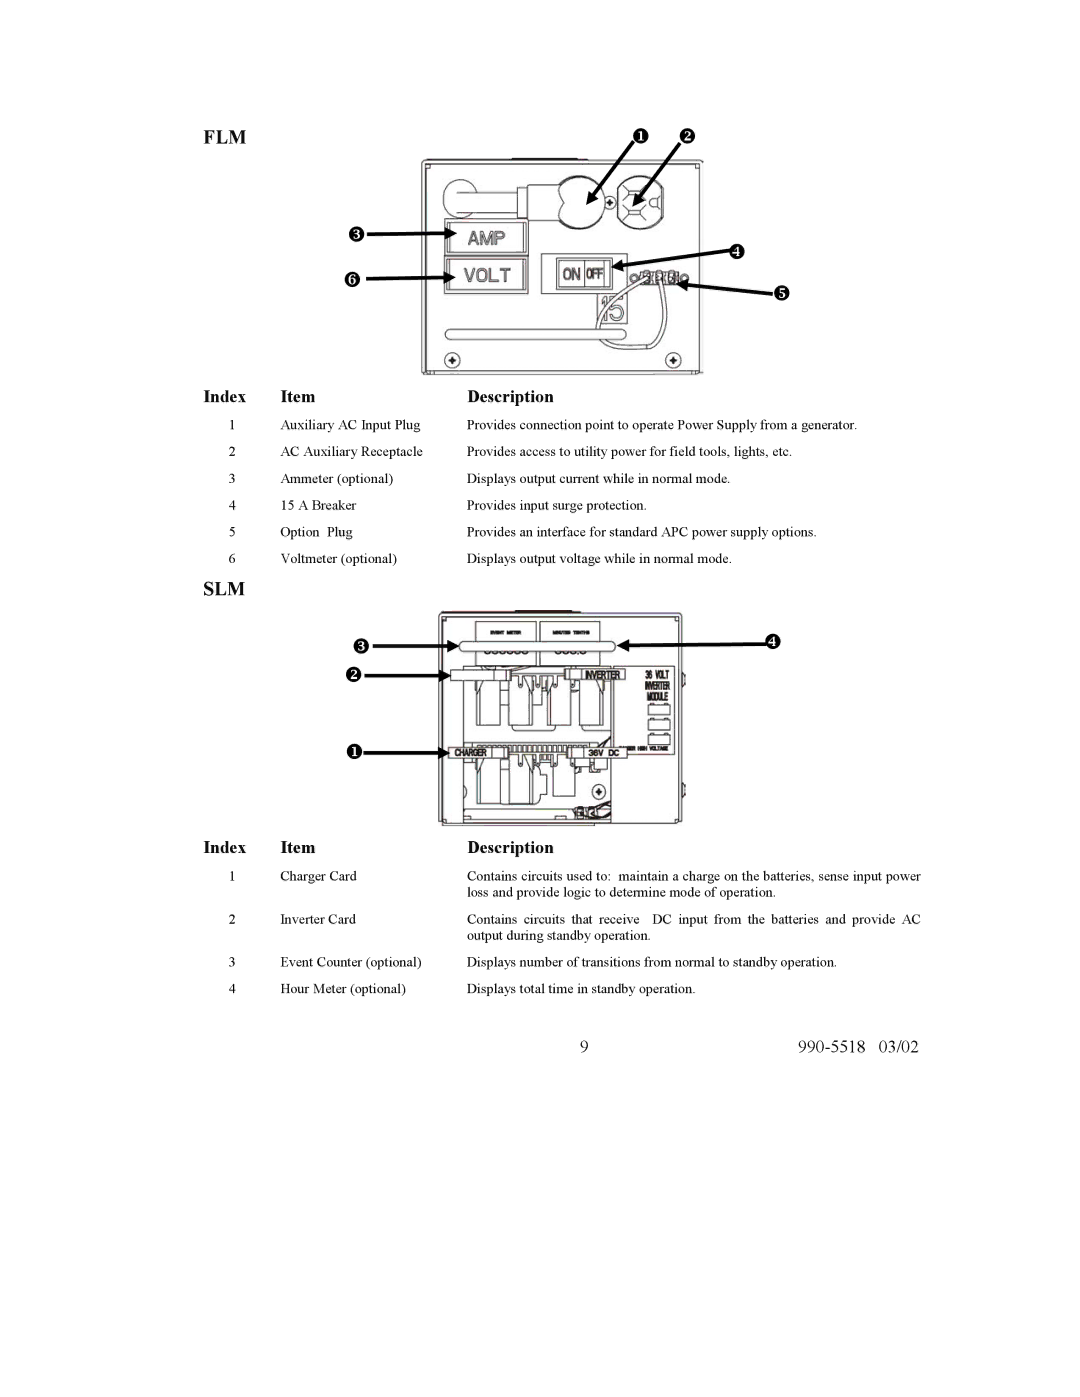 American Power Conversion CTSLP/G user manual Flm 